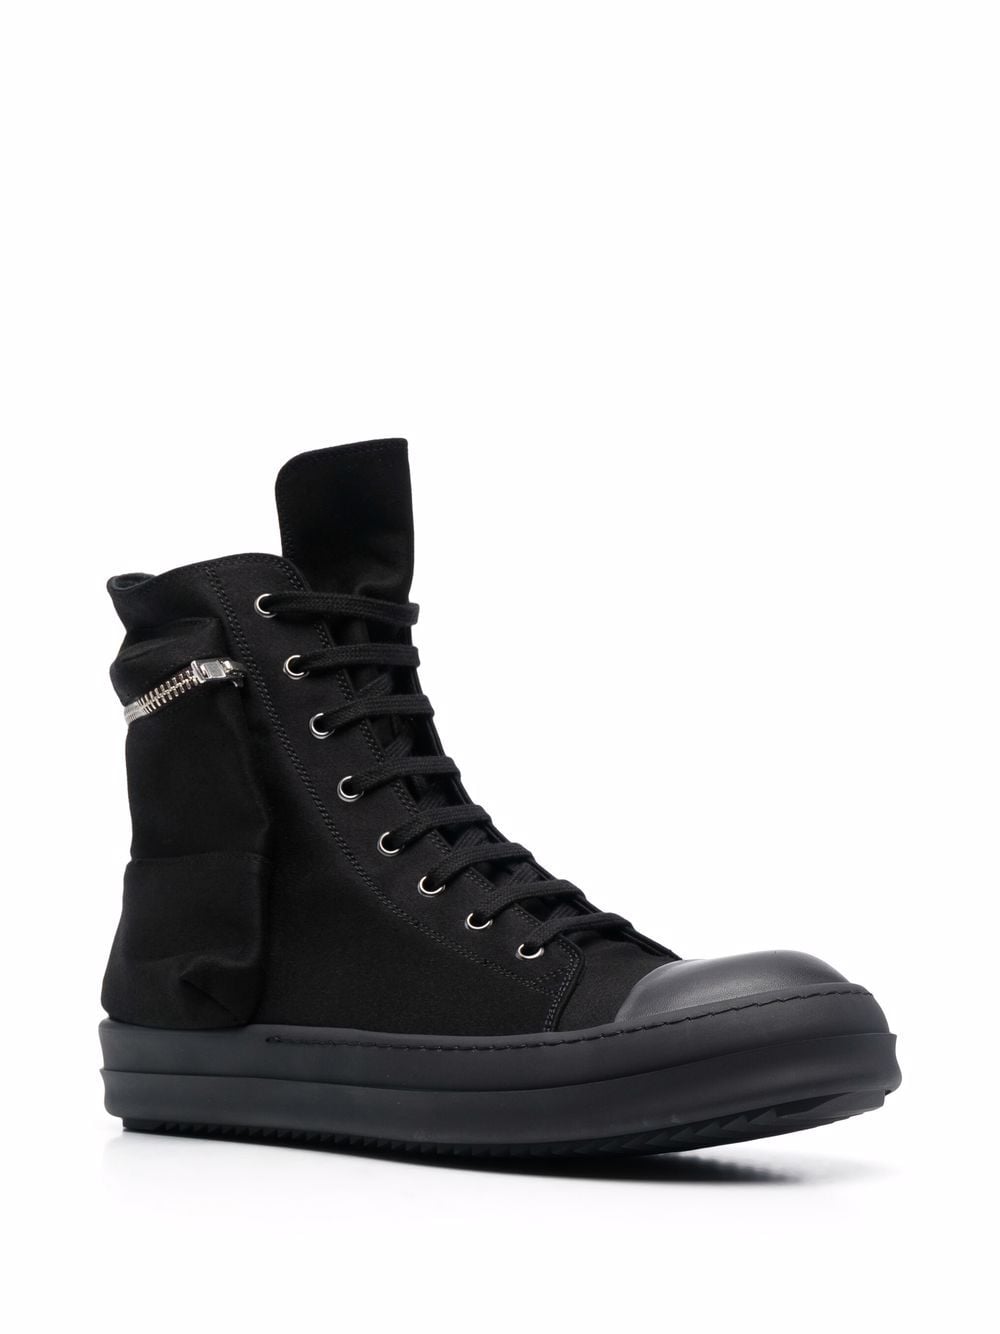 RICK OWENS DRKSHDW High Top Sneakers Black - MAISONDEFASHION.COM